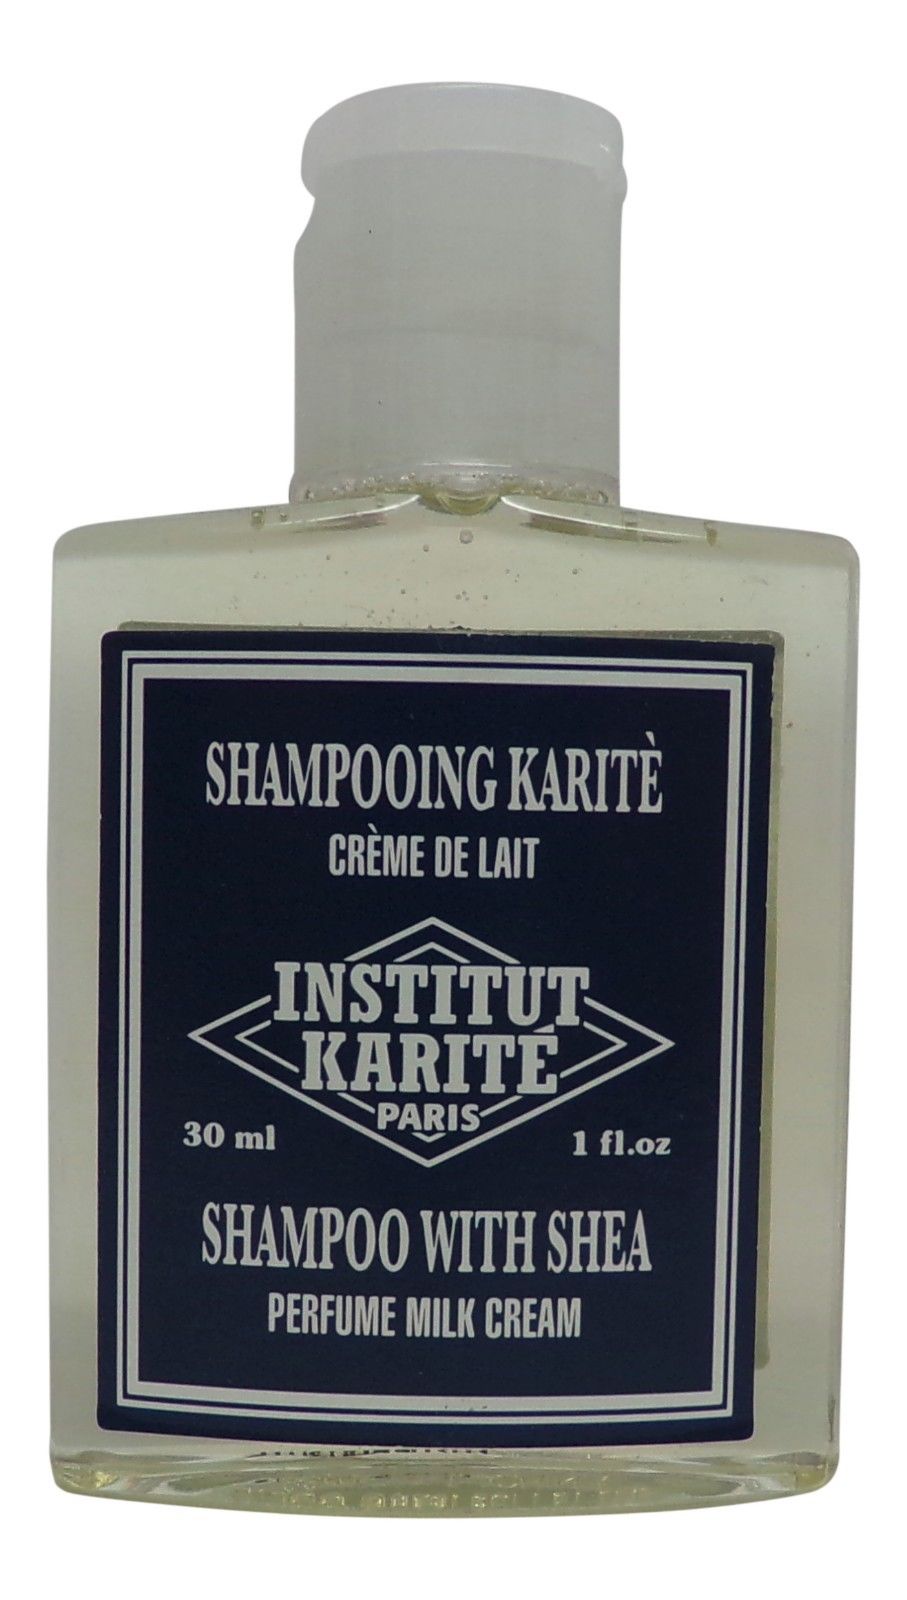 Institut Karite Shea Milk Cream Shampoo lot 4 Each 1oz bottles. Total of 4oz